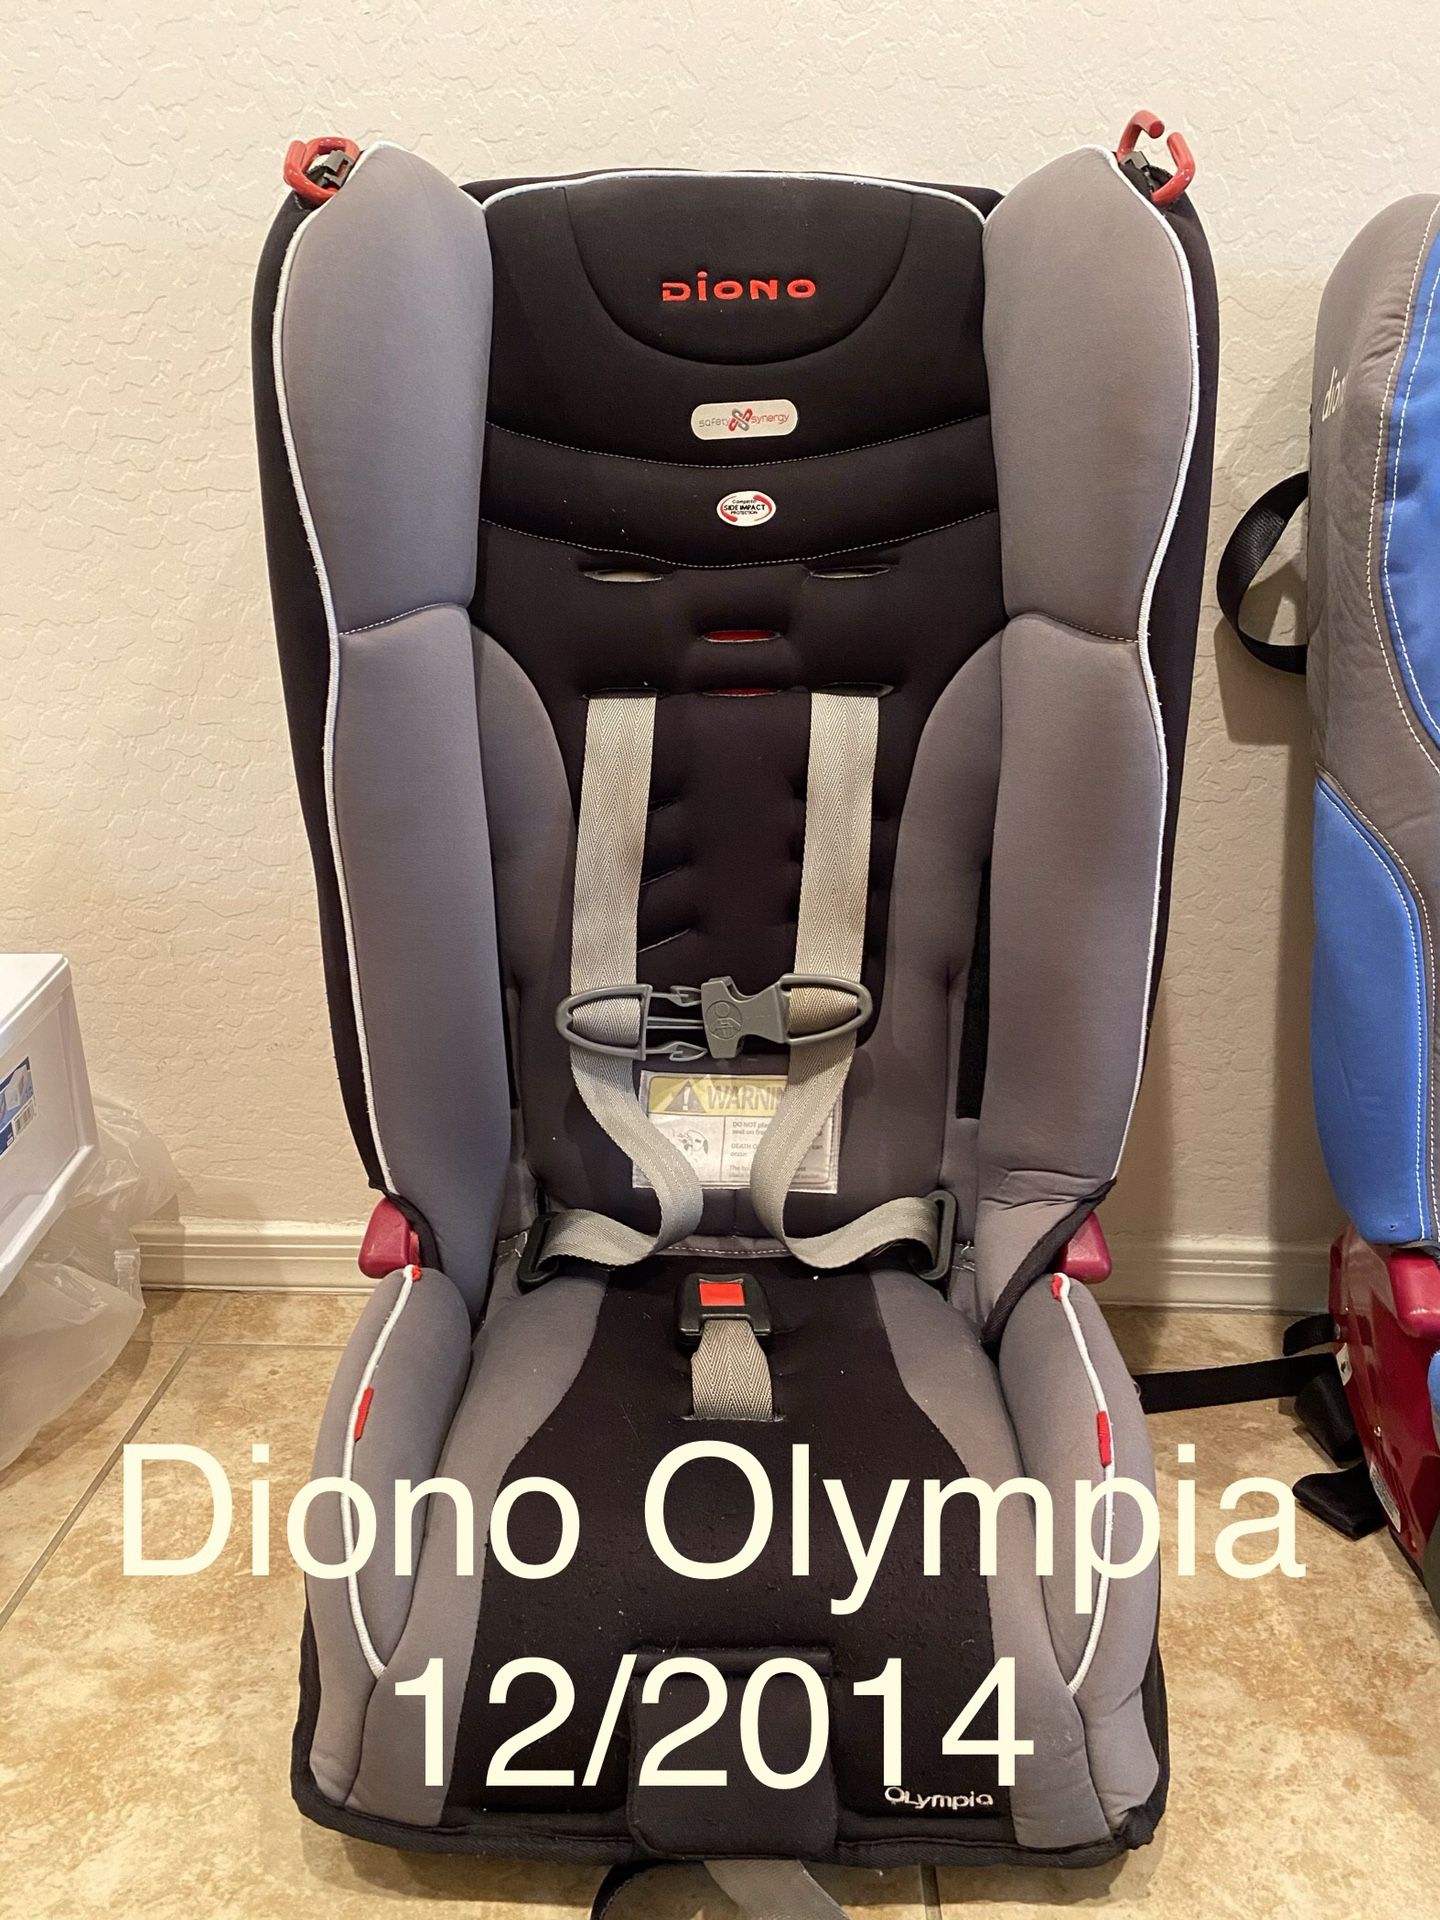 Diono Olympia Convertible Car Seat